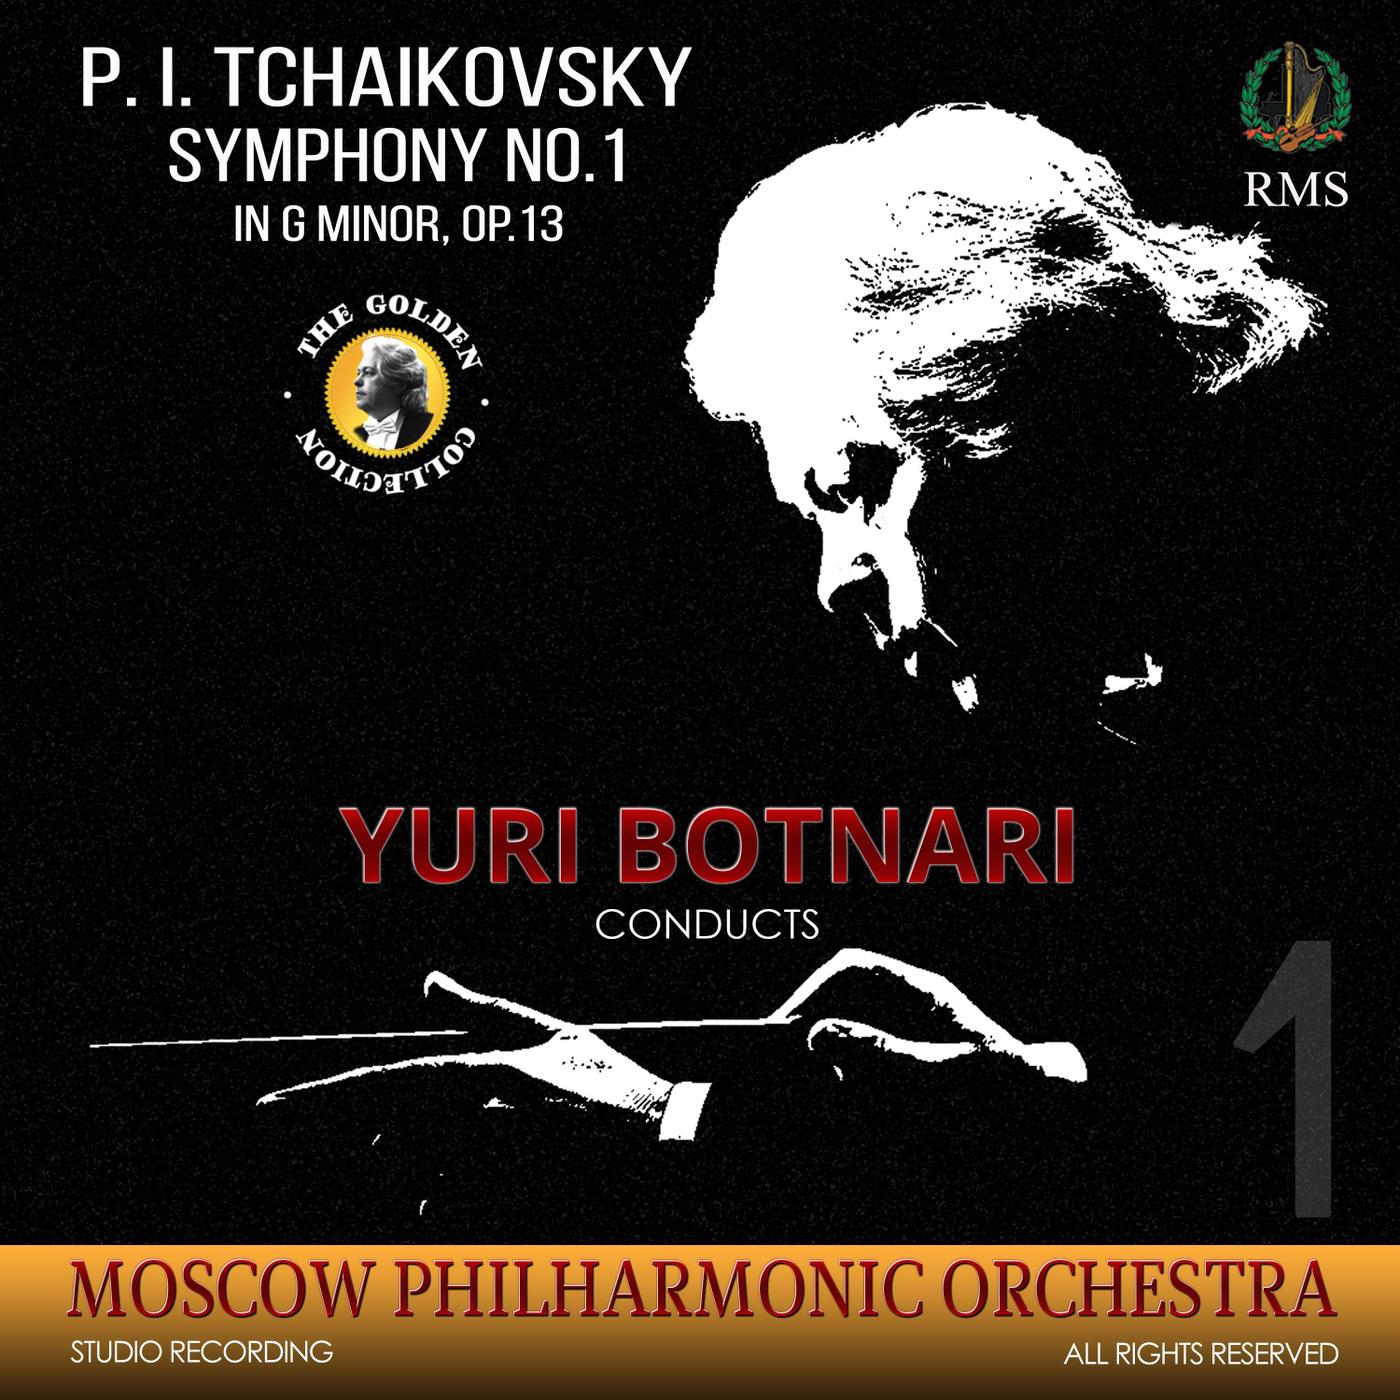 Pyotr Ilyich Tchaikovsky: Symphony No. 1 in G Minor, Op. 13 "Winter Dreams"